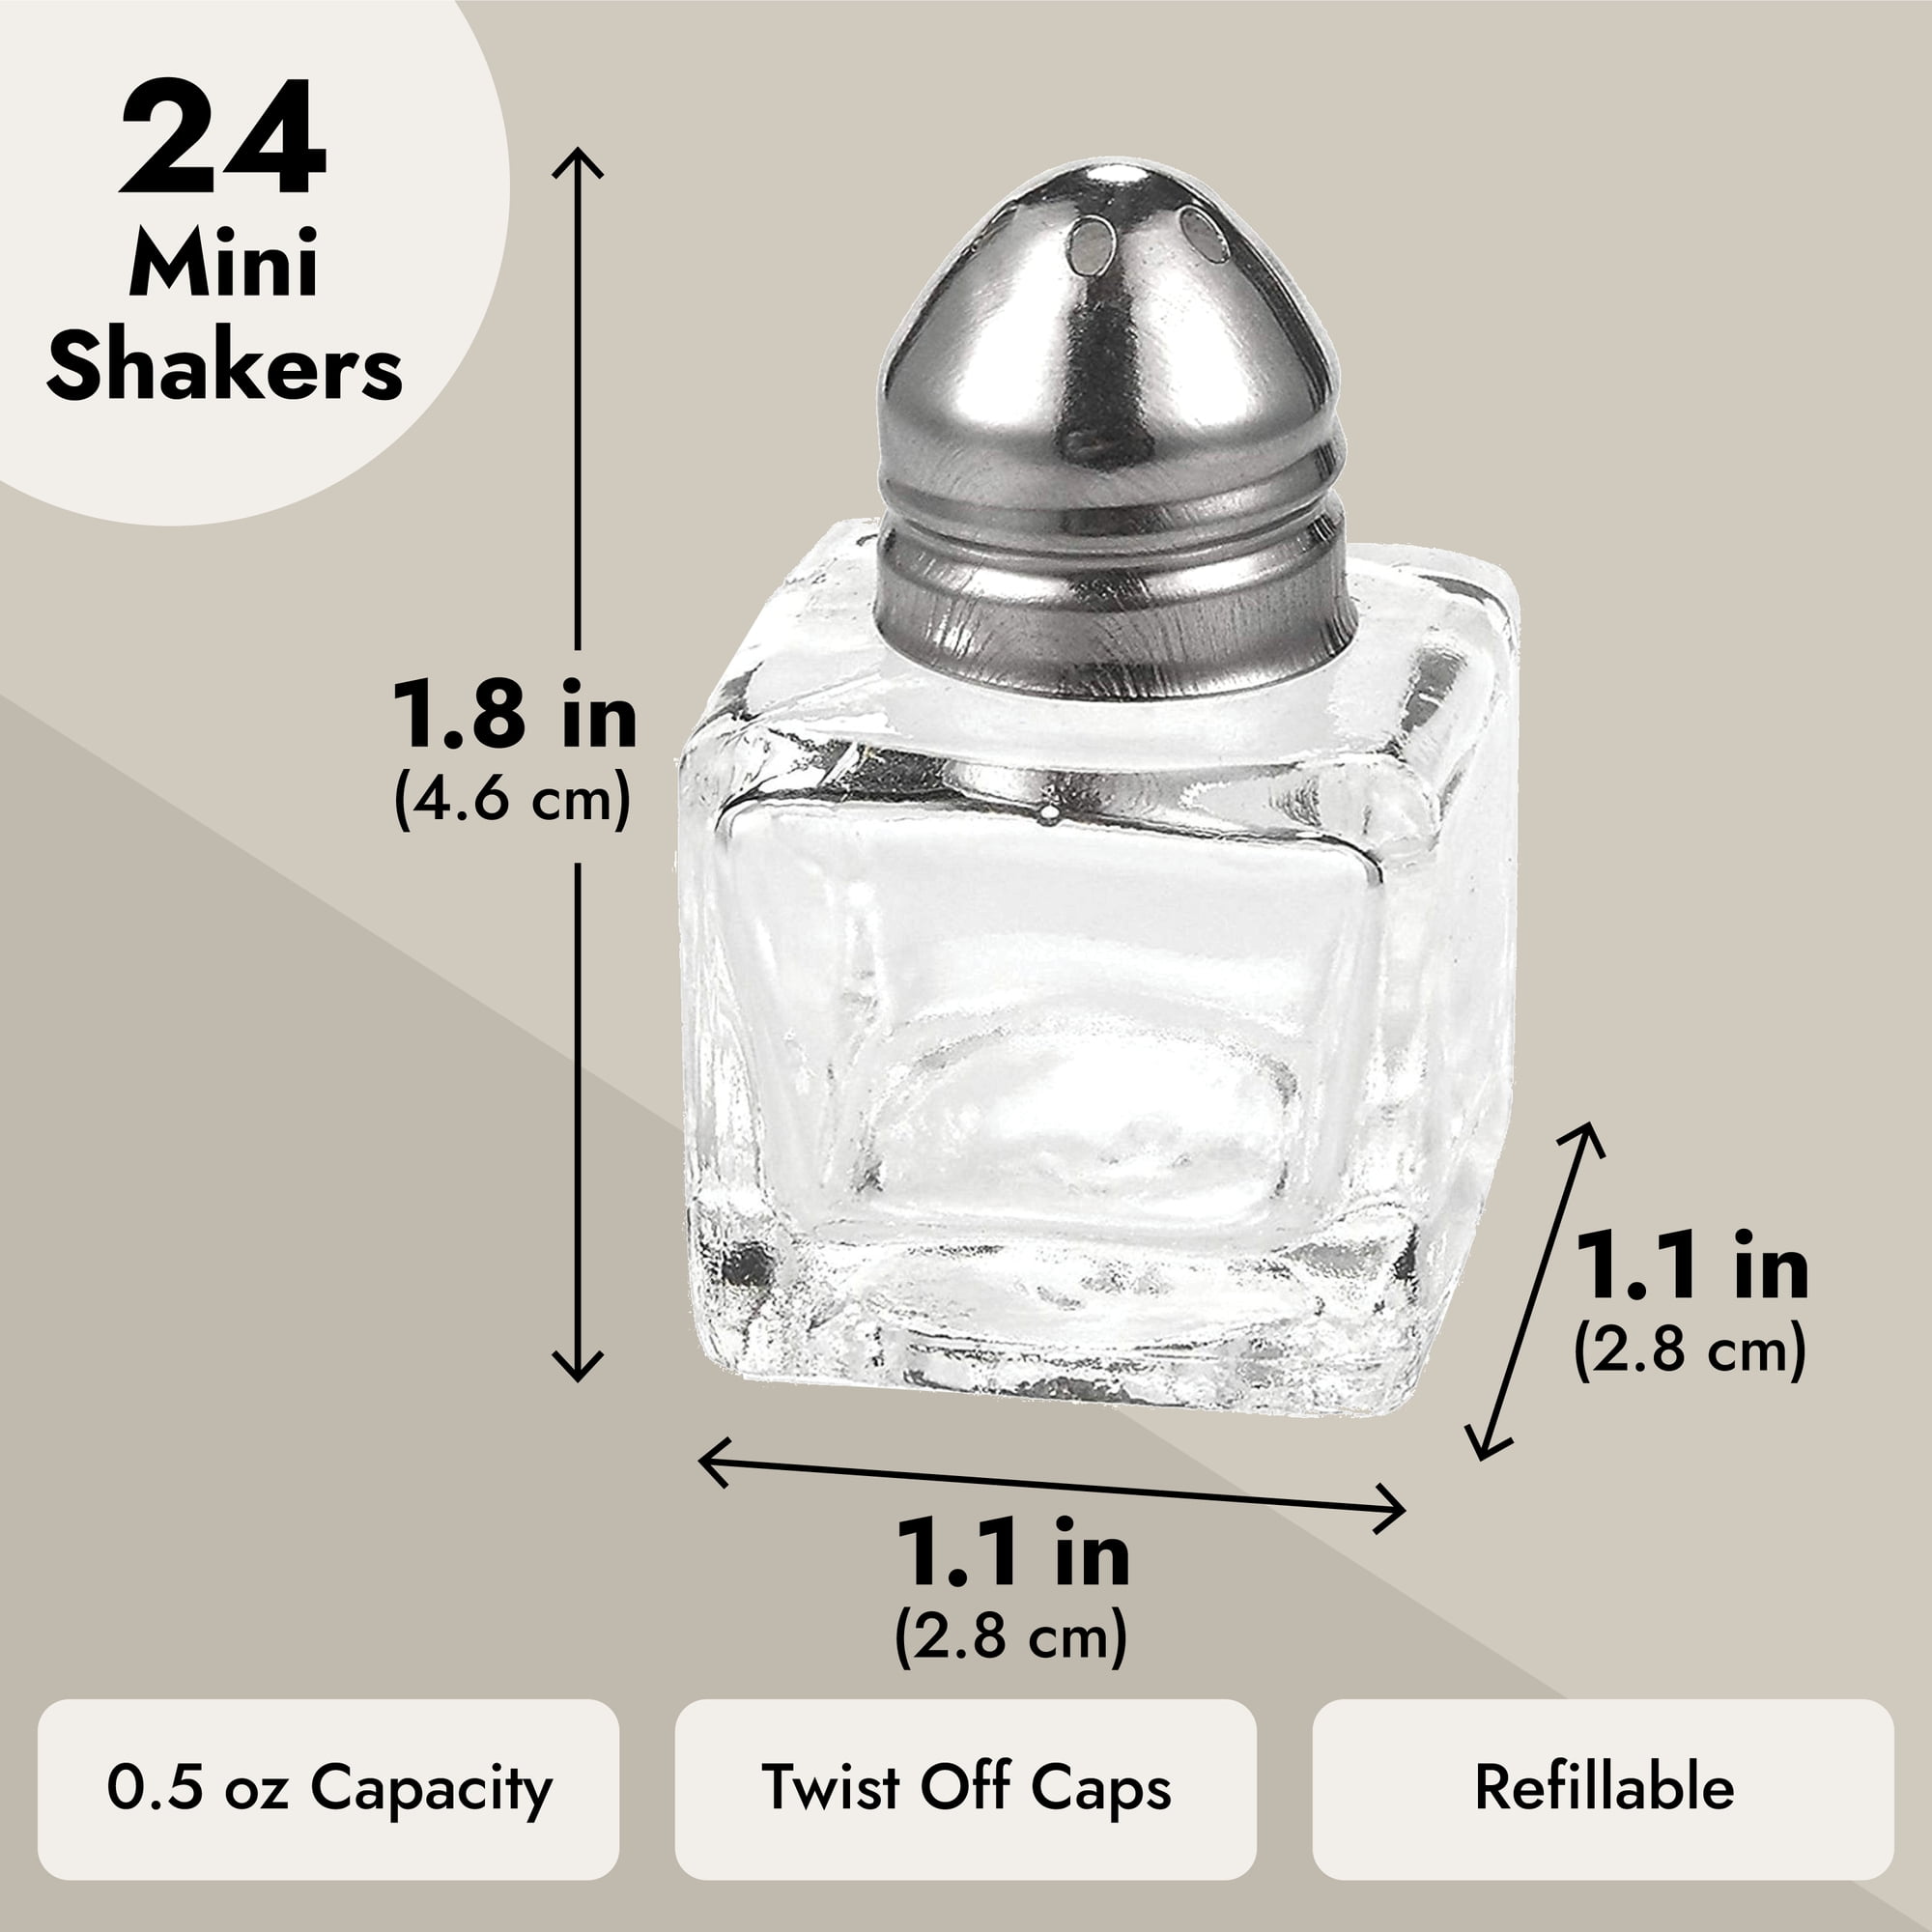  (Set of 12) Mini Salt and Pepper Shakers, 0.5 oz / 1/2 oz Glass  Cube Body Restaurant Salt and Pepper Shakers by Tezzorio: Home & Kitchen